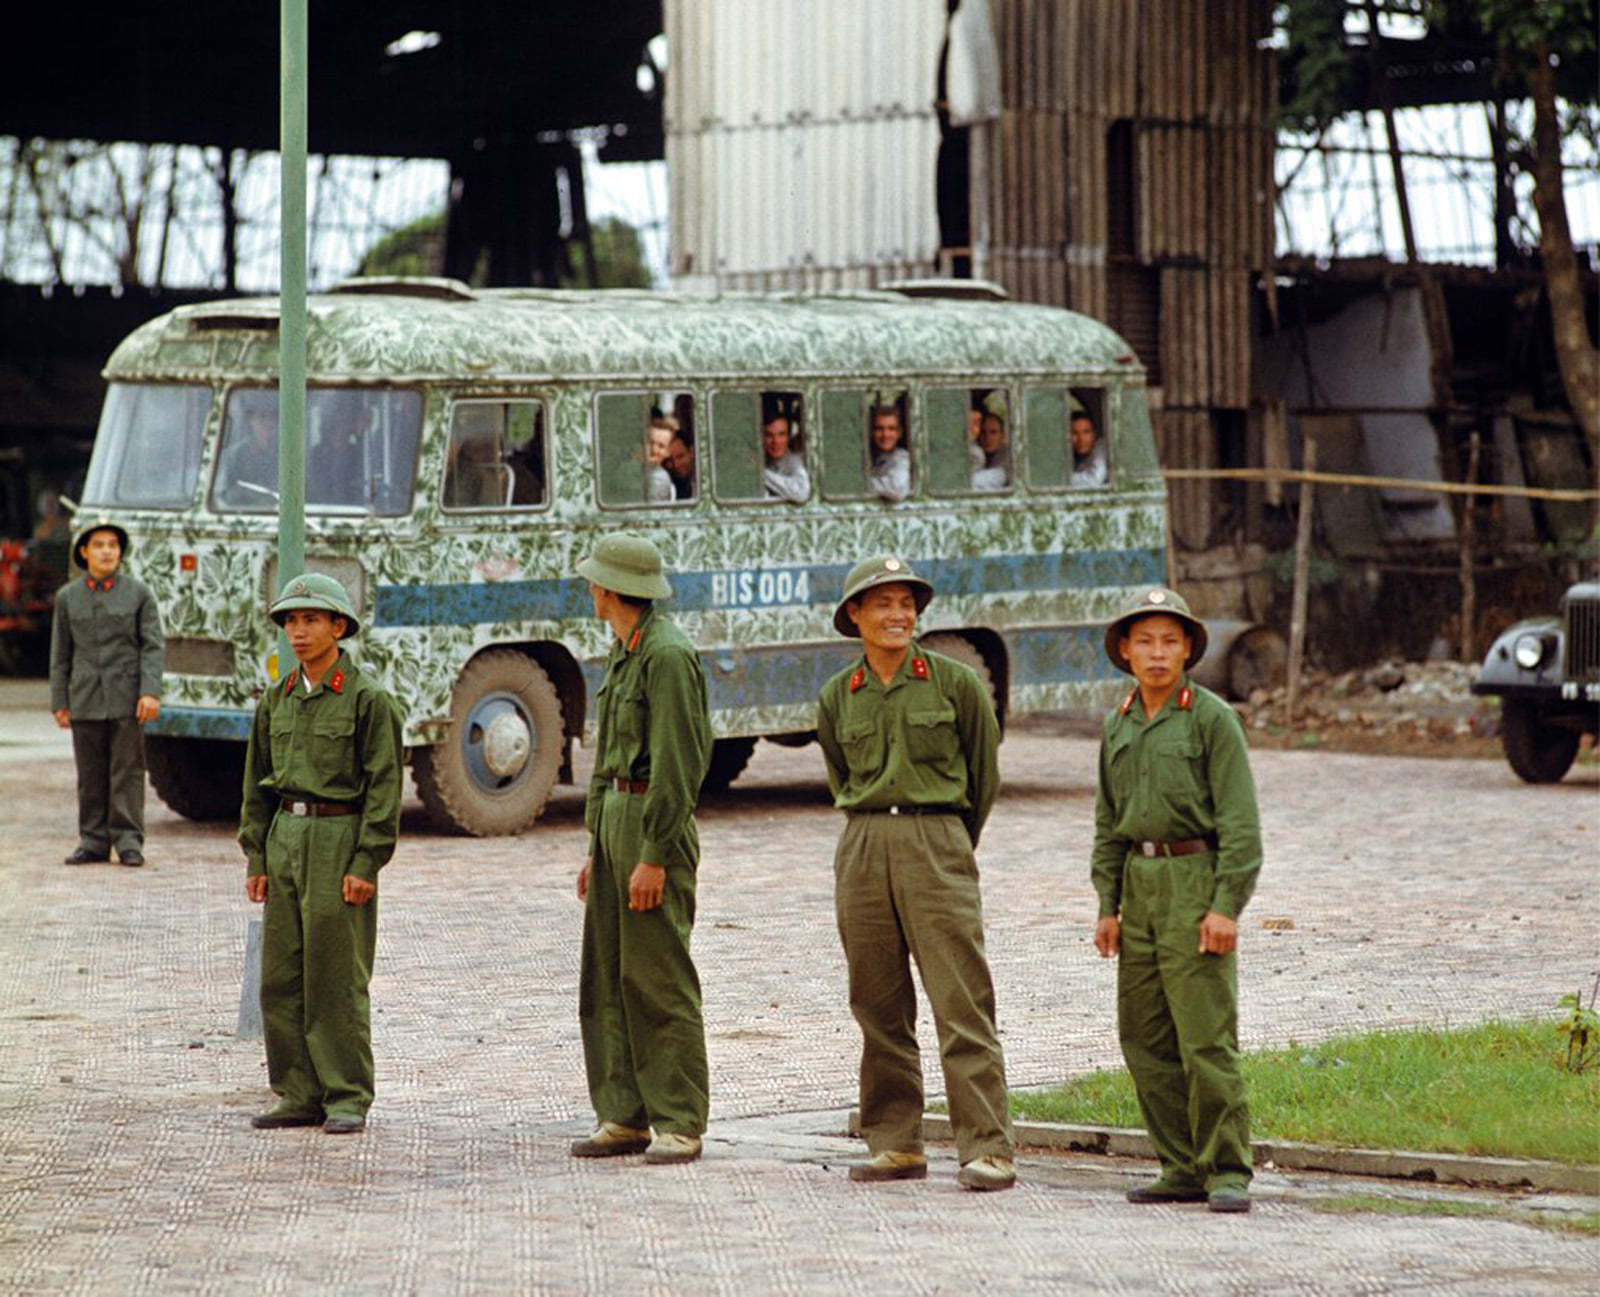 Натиснете снимката за да я уголемите  Име:30-0-8-@-PAZ 672 YU-voenen avtomobil na Quân đội Nhân dân-Vietnam-1973-.jpg Прегледи:0 Размер:267.7 КБ ID:6880731